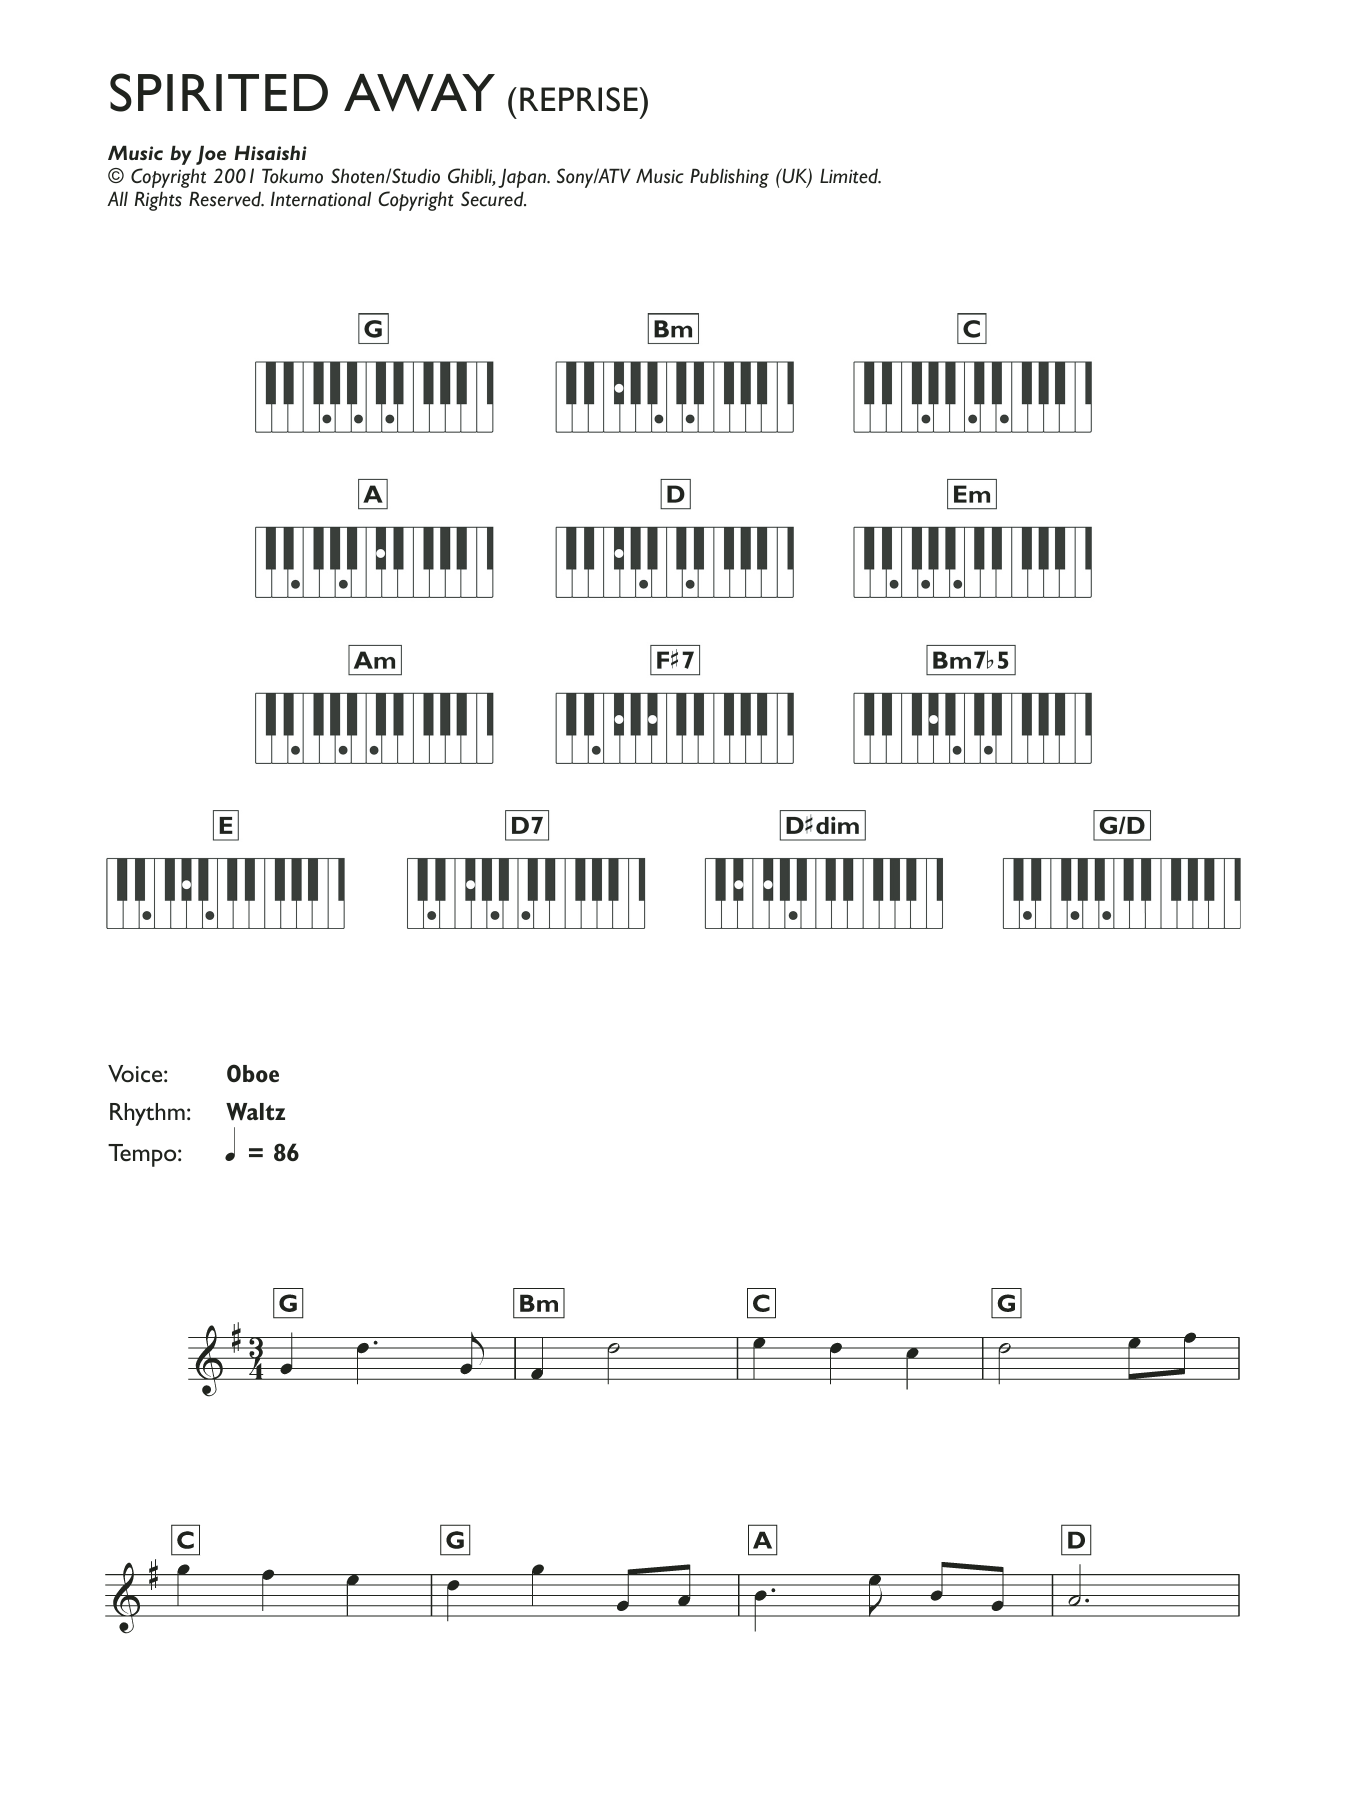 Joe Hisaishi Reprise (from Spirited Away) Sheet Music Notes & Chords for Keyboard - Download or Print PDF